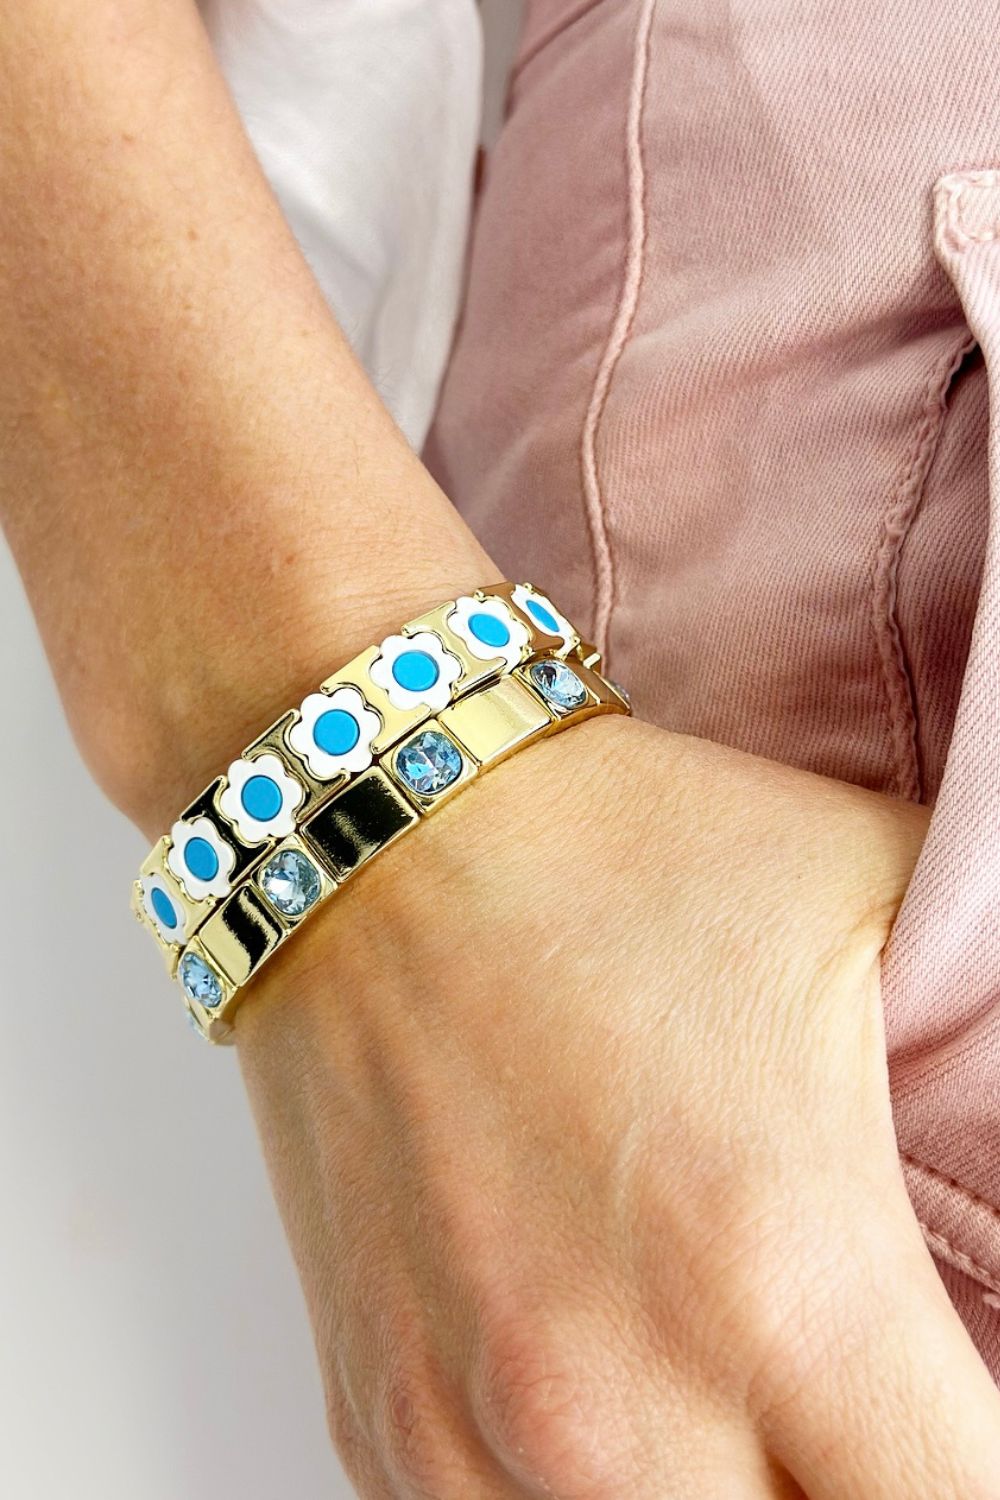 Daisy chain bracelet - pink/white/blue